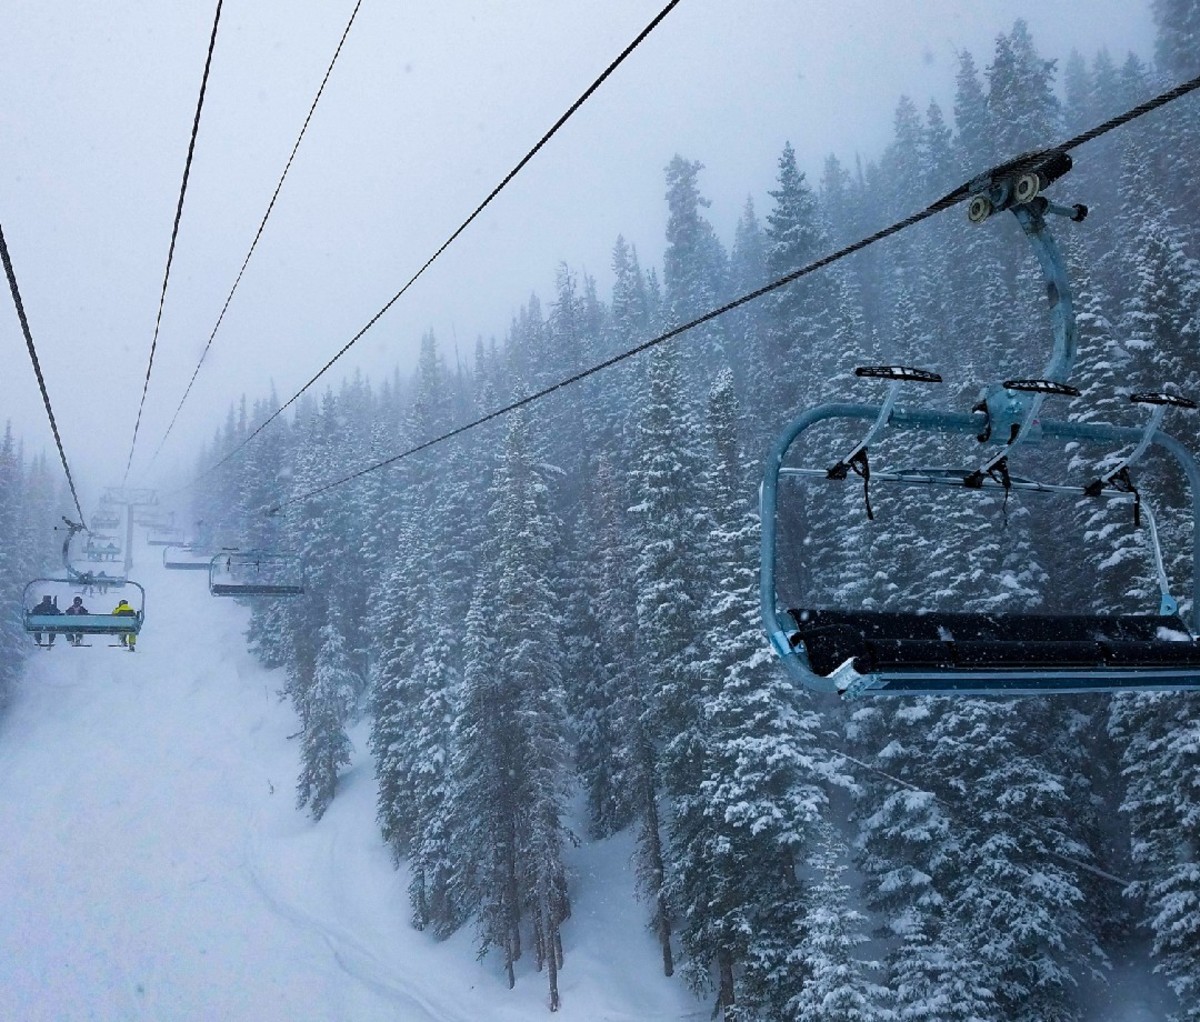 Ski lift in Vail, Colorado